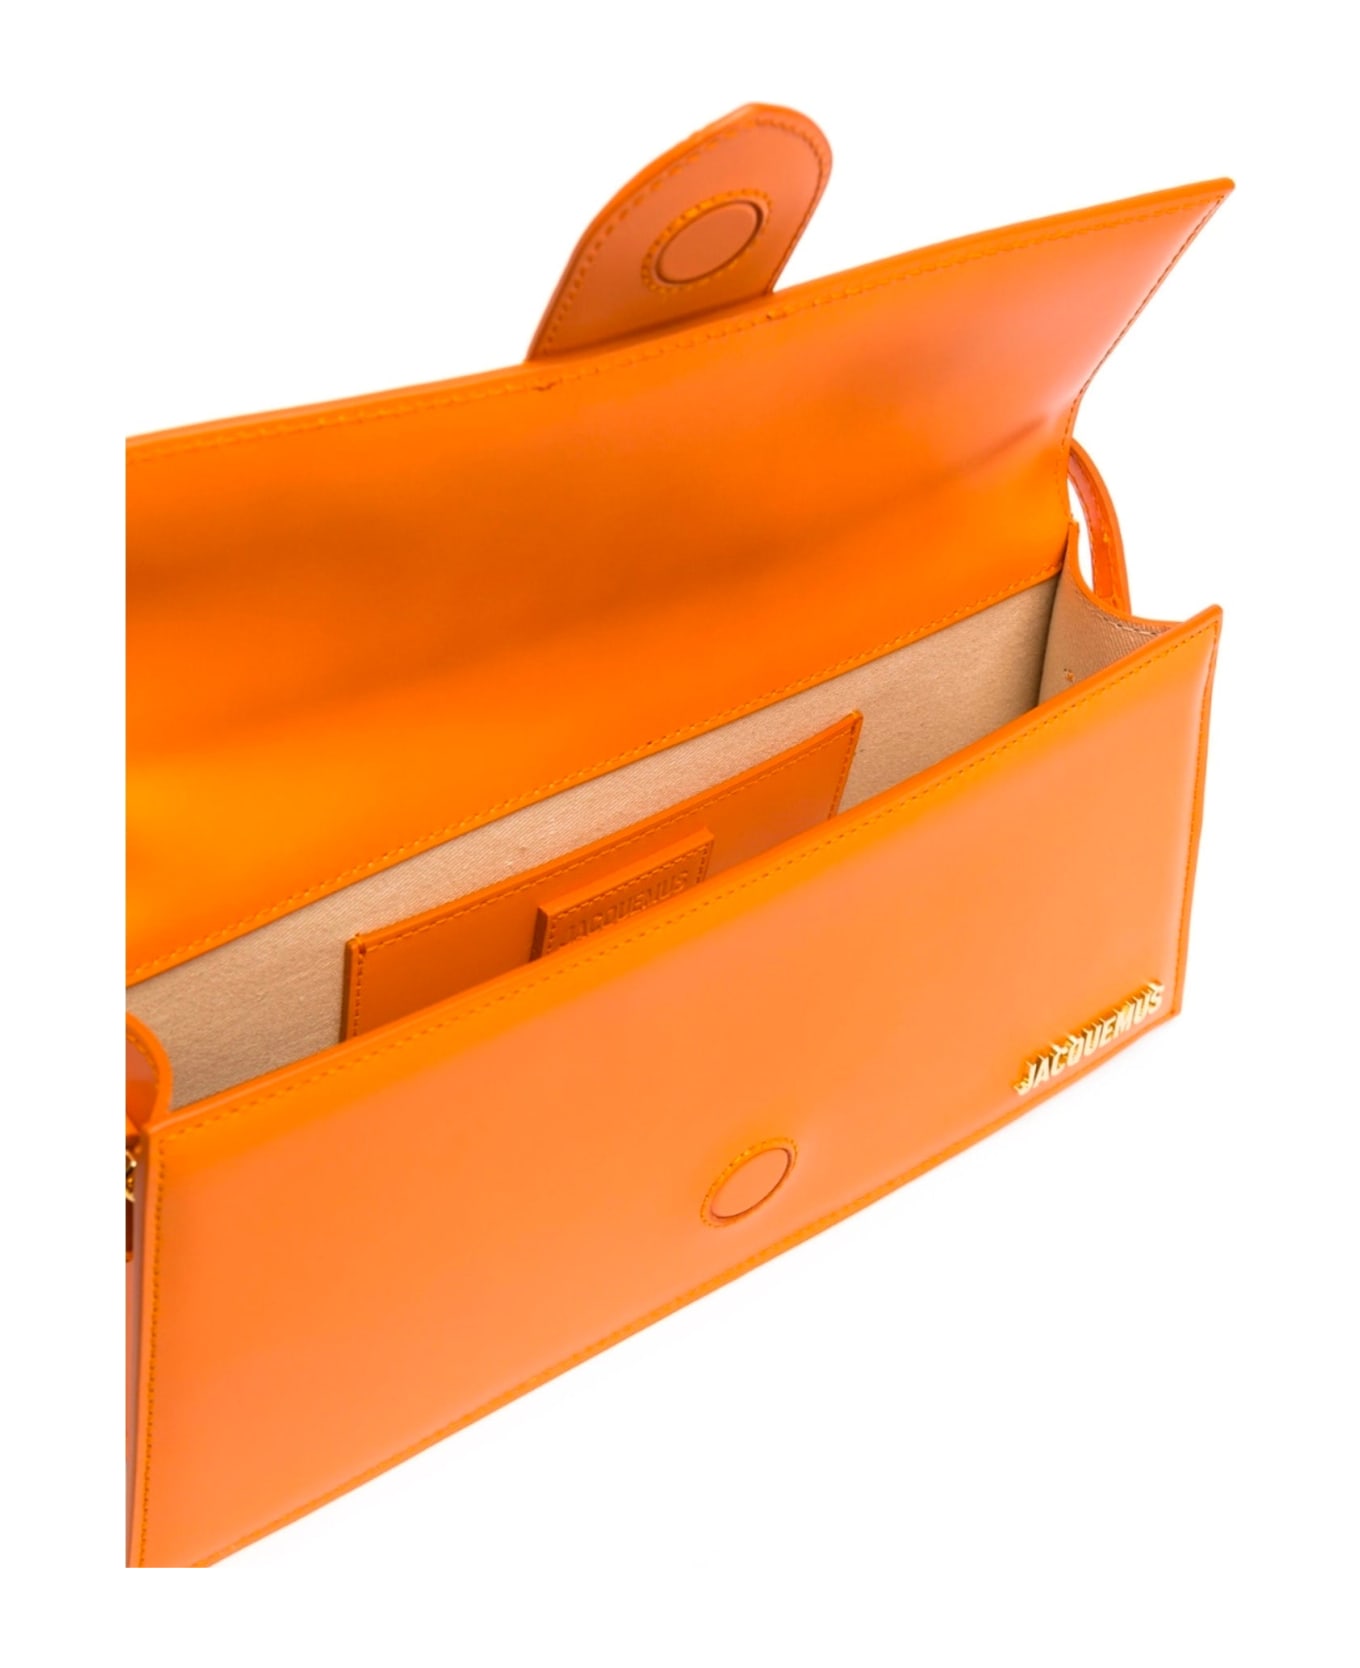 Jacquemus Le Bambino Long Bag - Orange